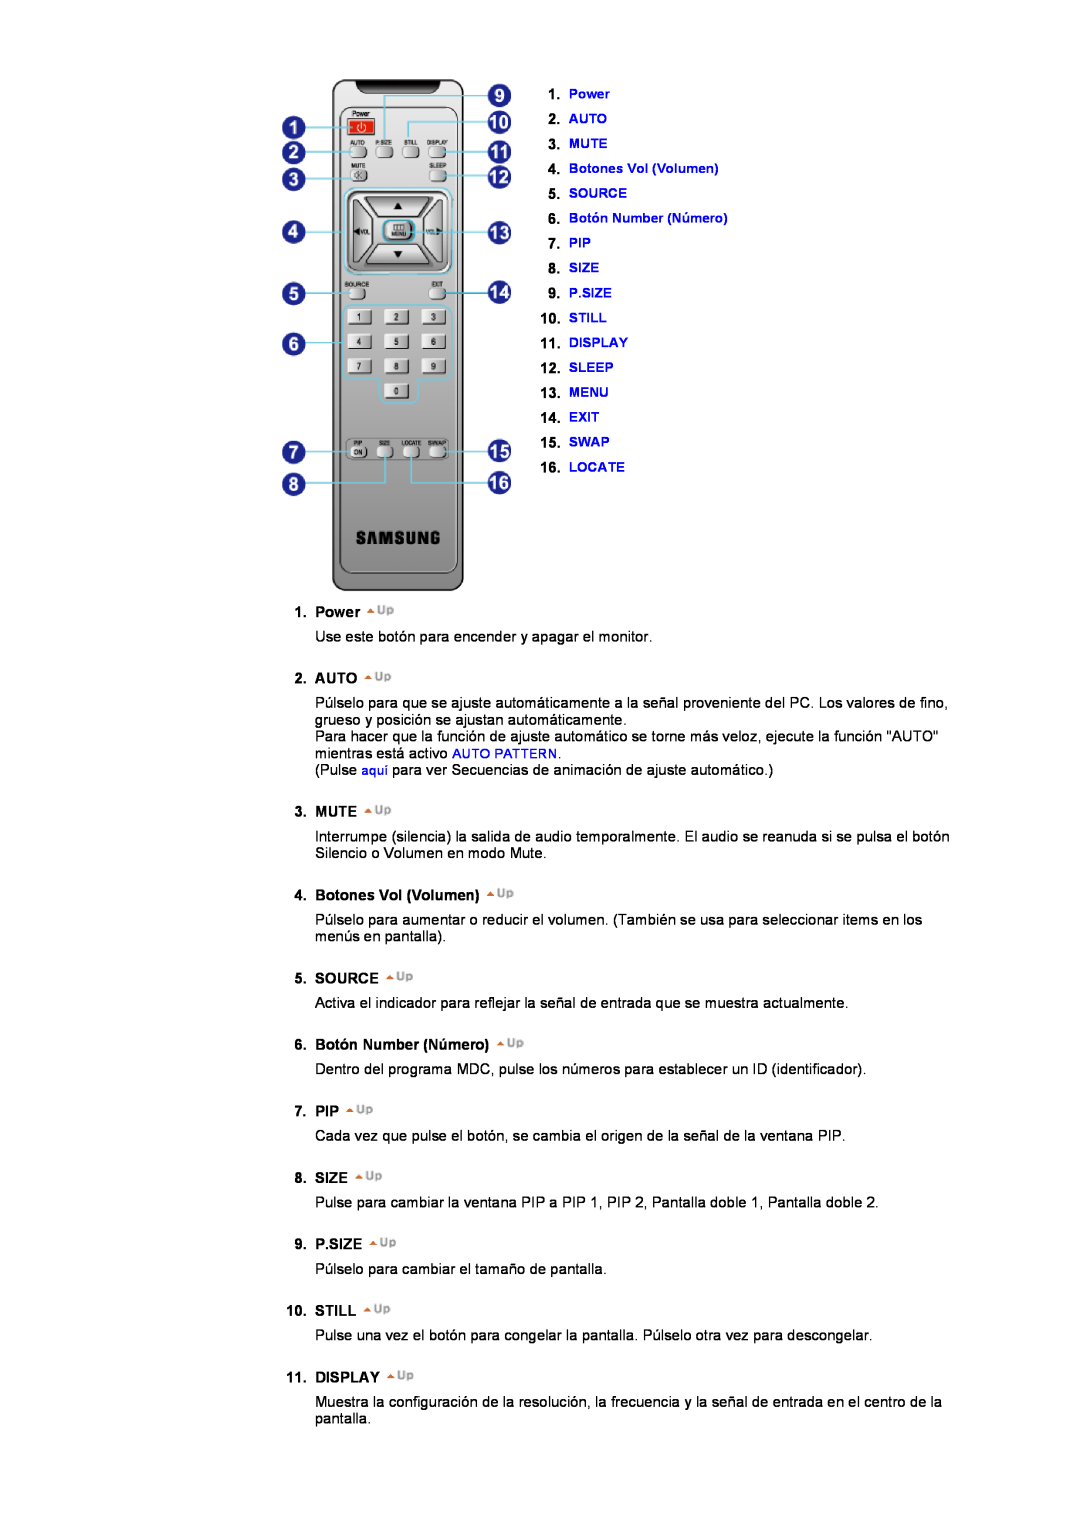 Samsung CK40PSNS/EDC Power, Auto, Mute, Botones Vol Volumen, Source, Botón Number Número, Pip, Size, 9. P.SIZE, Still 